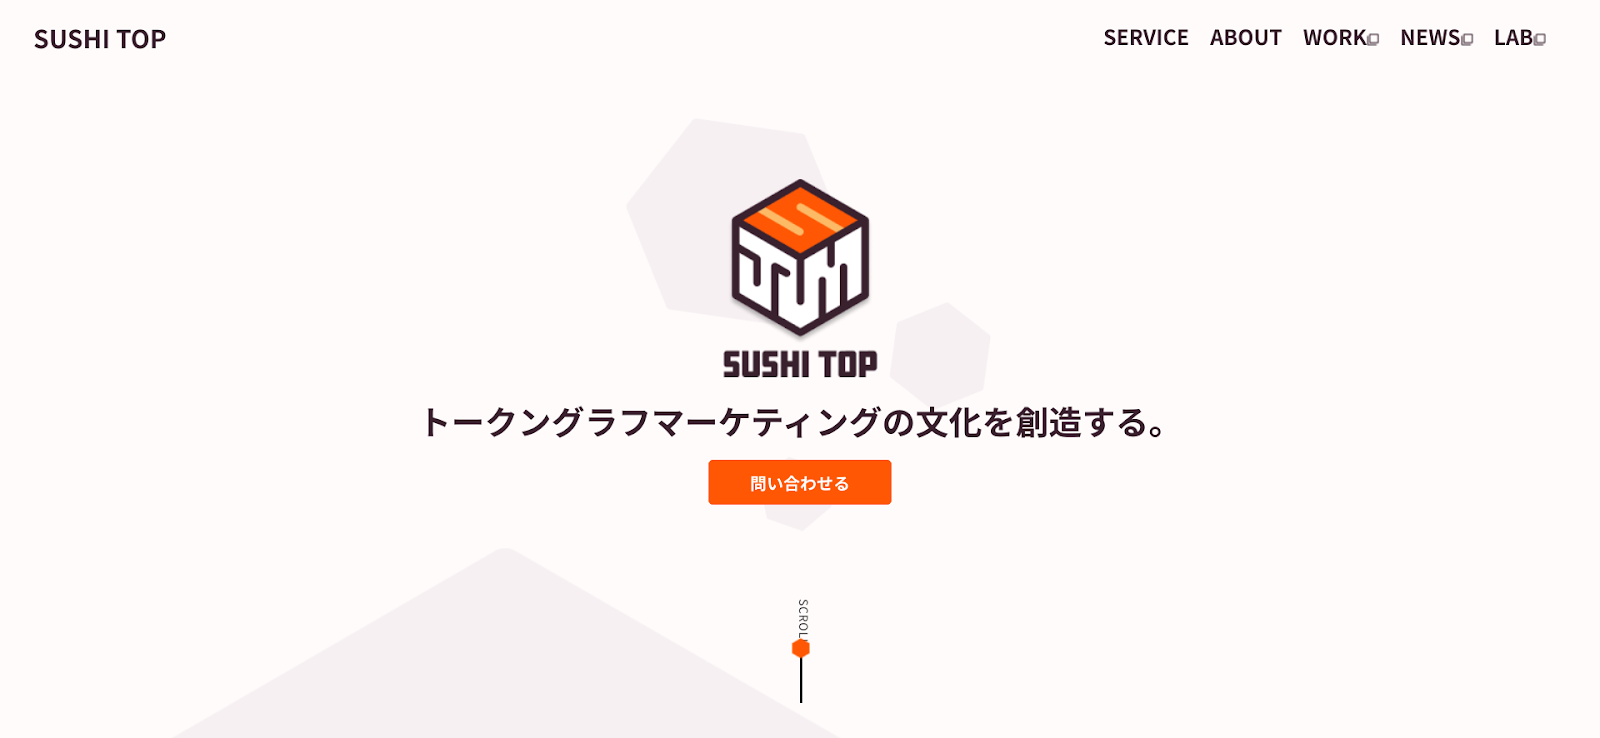 SUSHI TOP MARKETINGの公式サイト画像